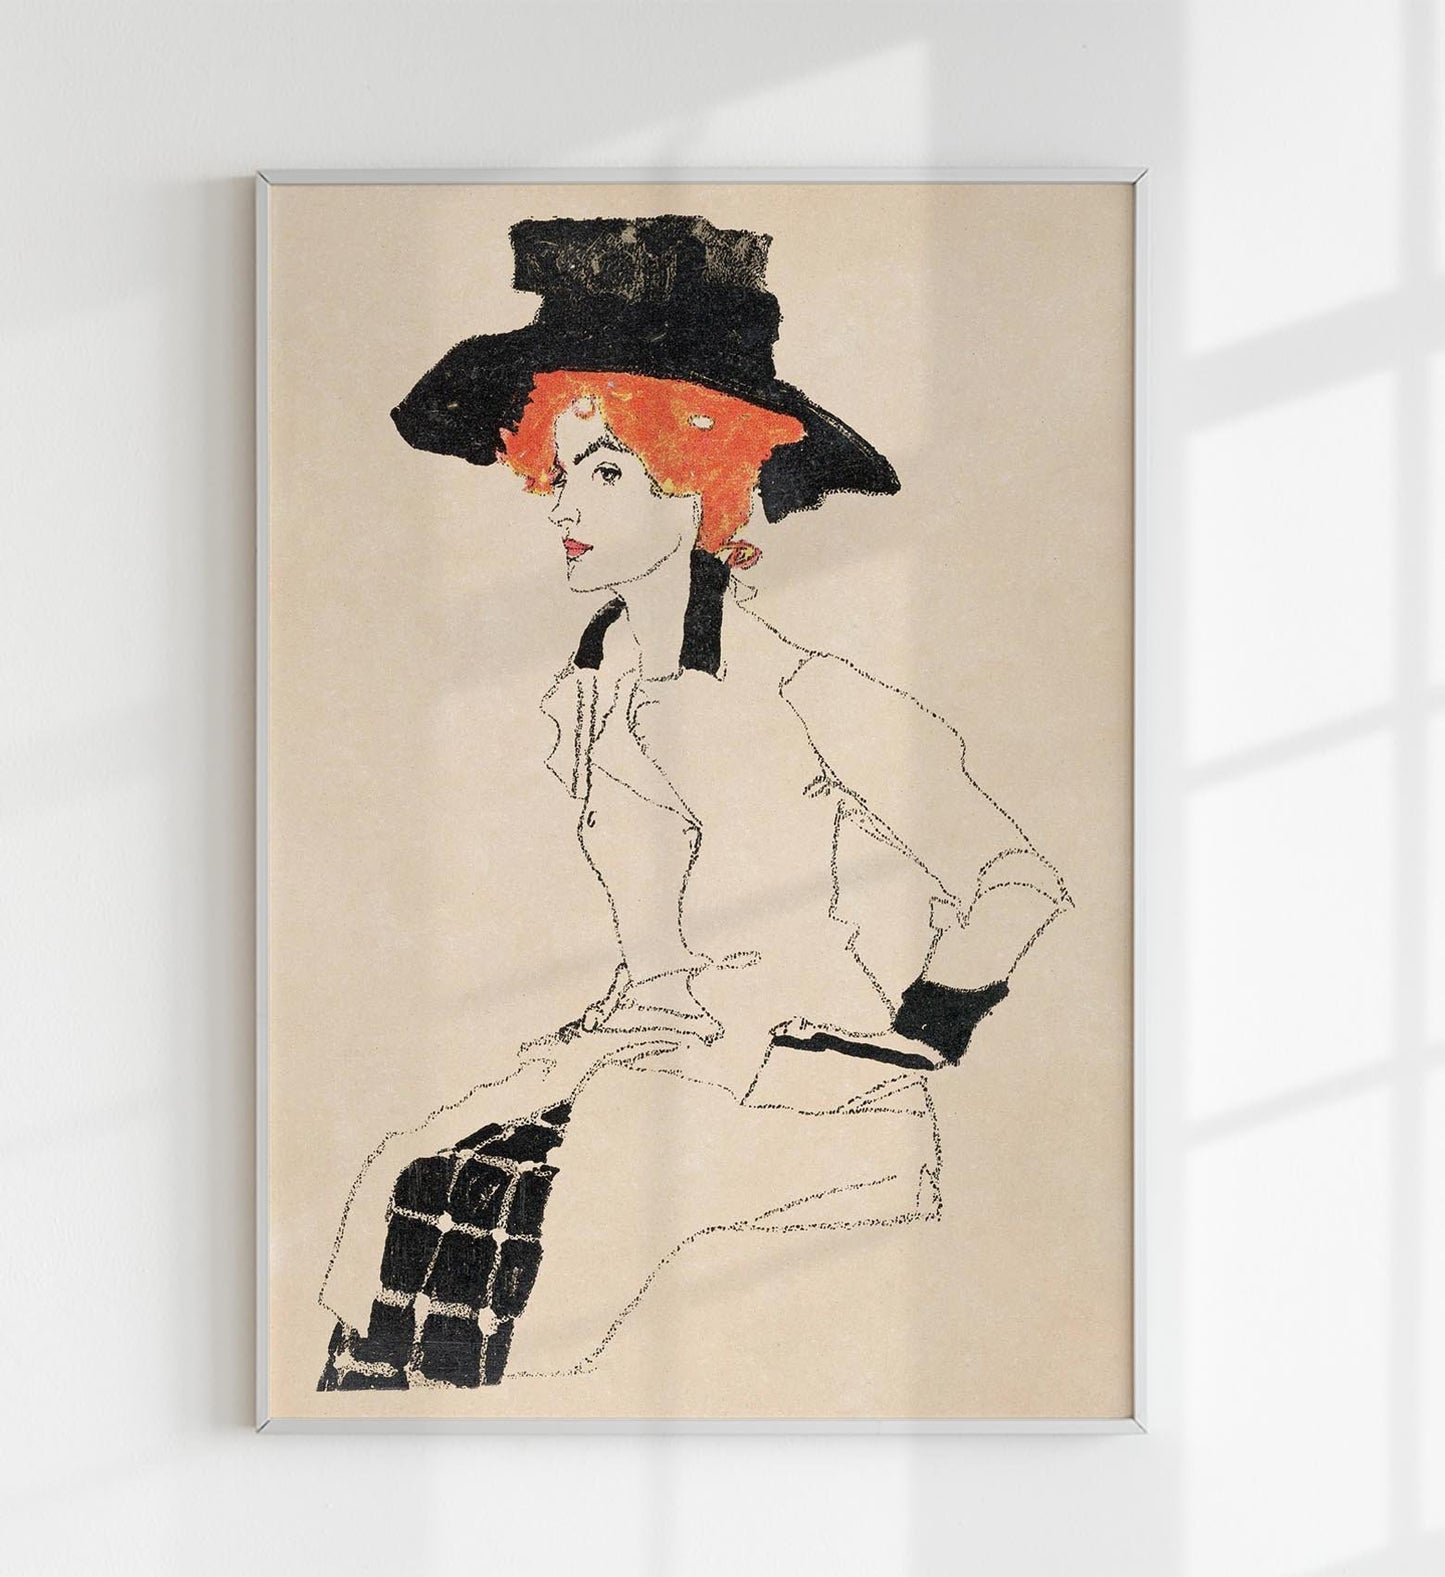 Portrait of a Woman in a hat by Egon Schiele